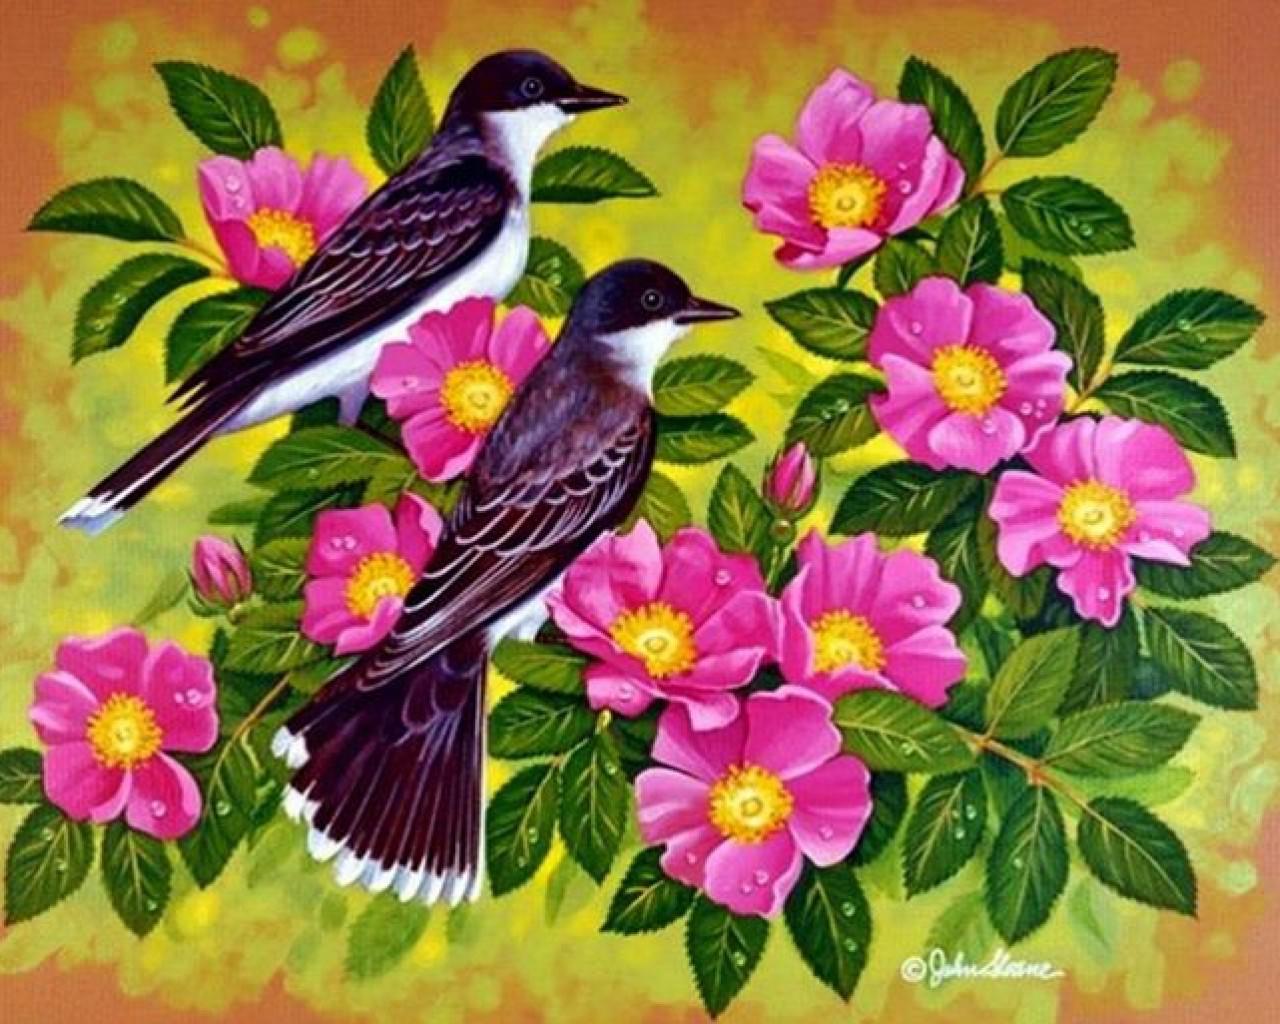 44 Wallpaper Birds and Flowers  WallpaperSafari